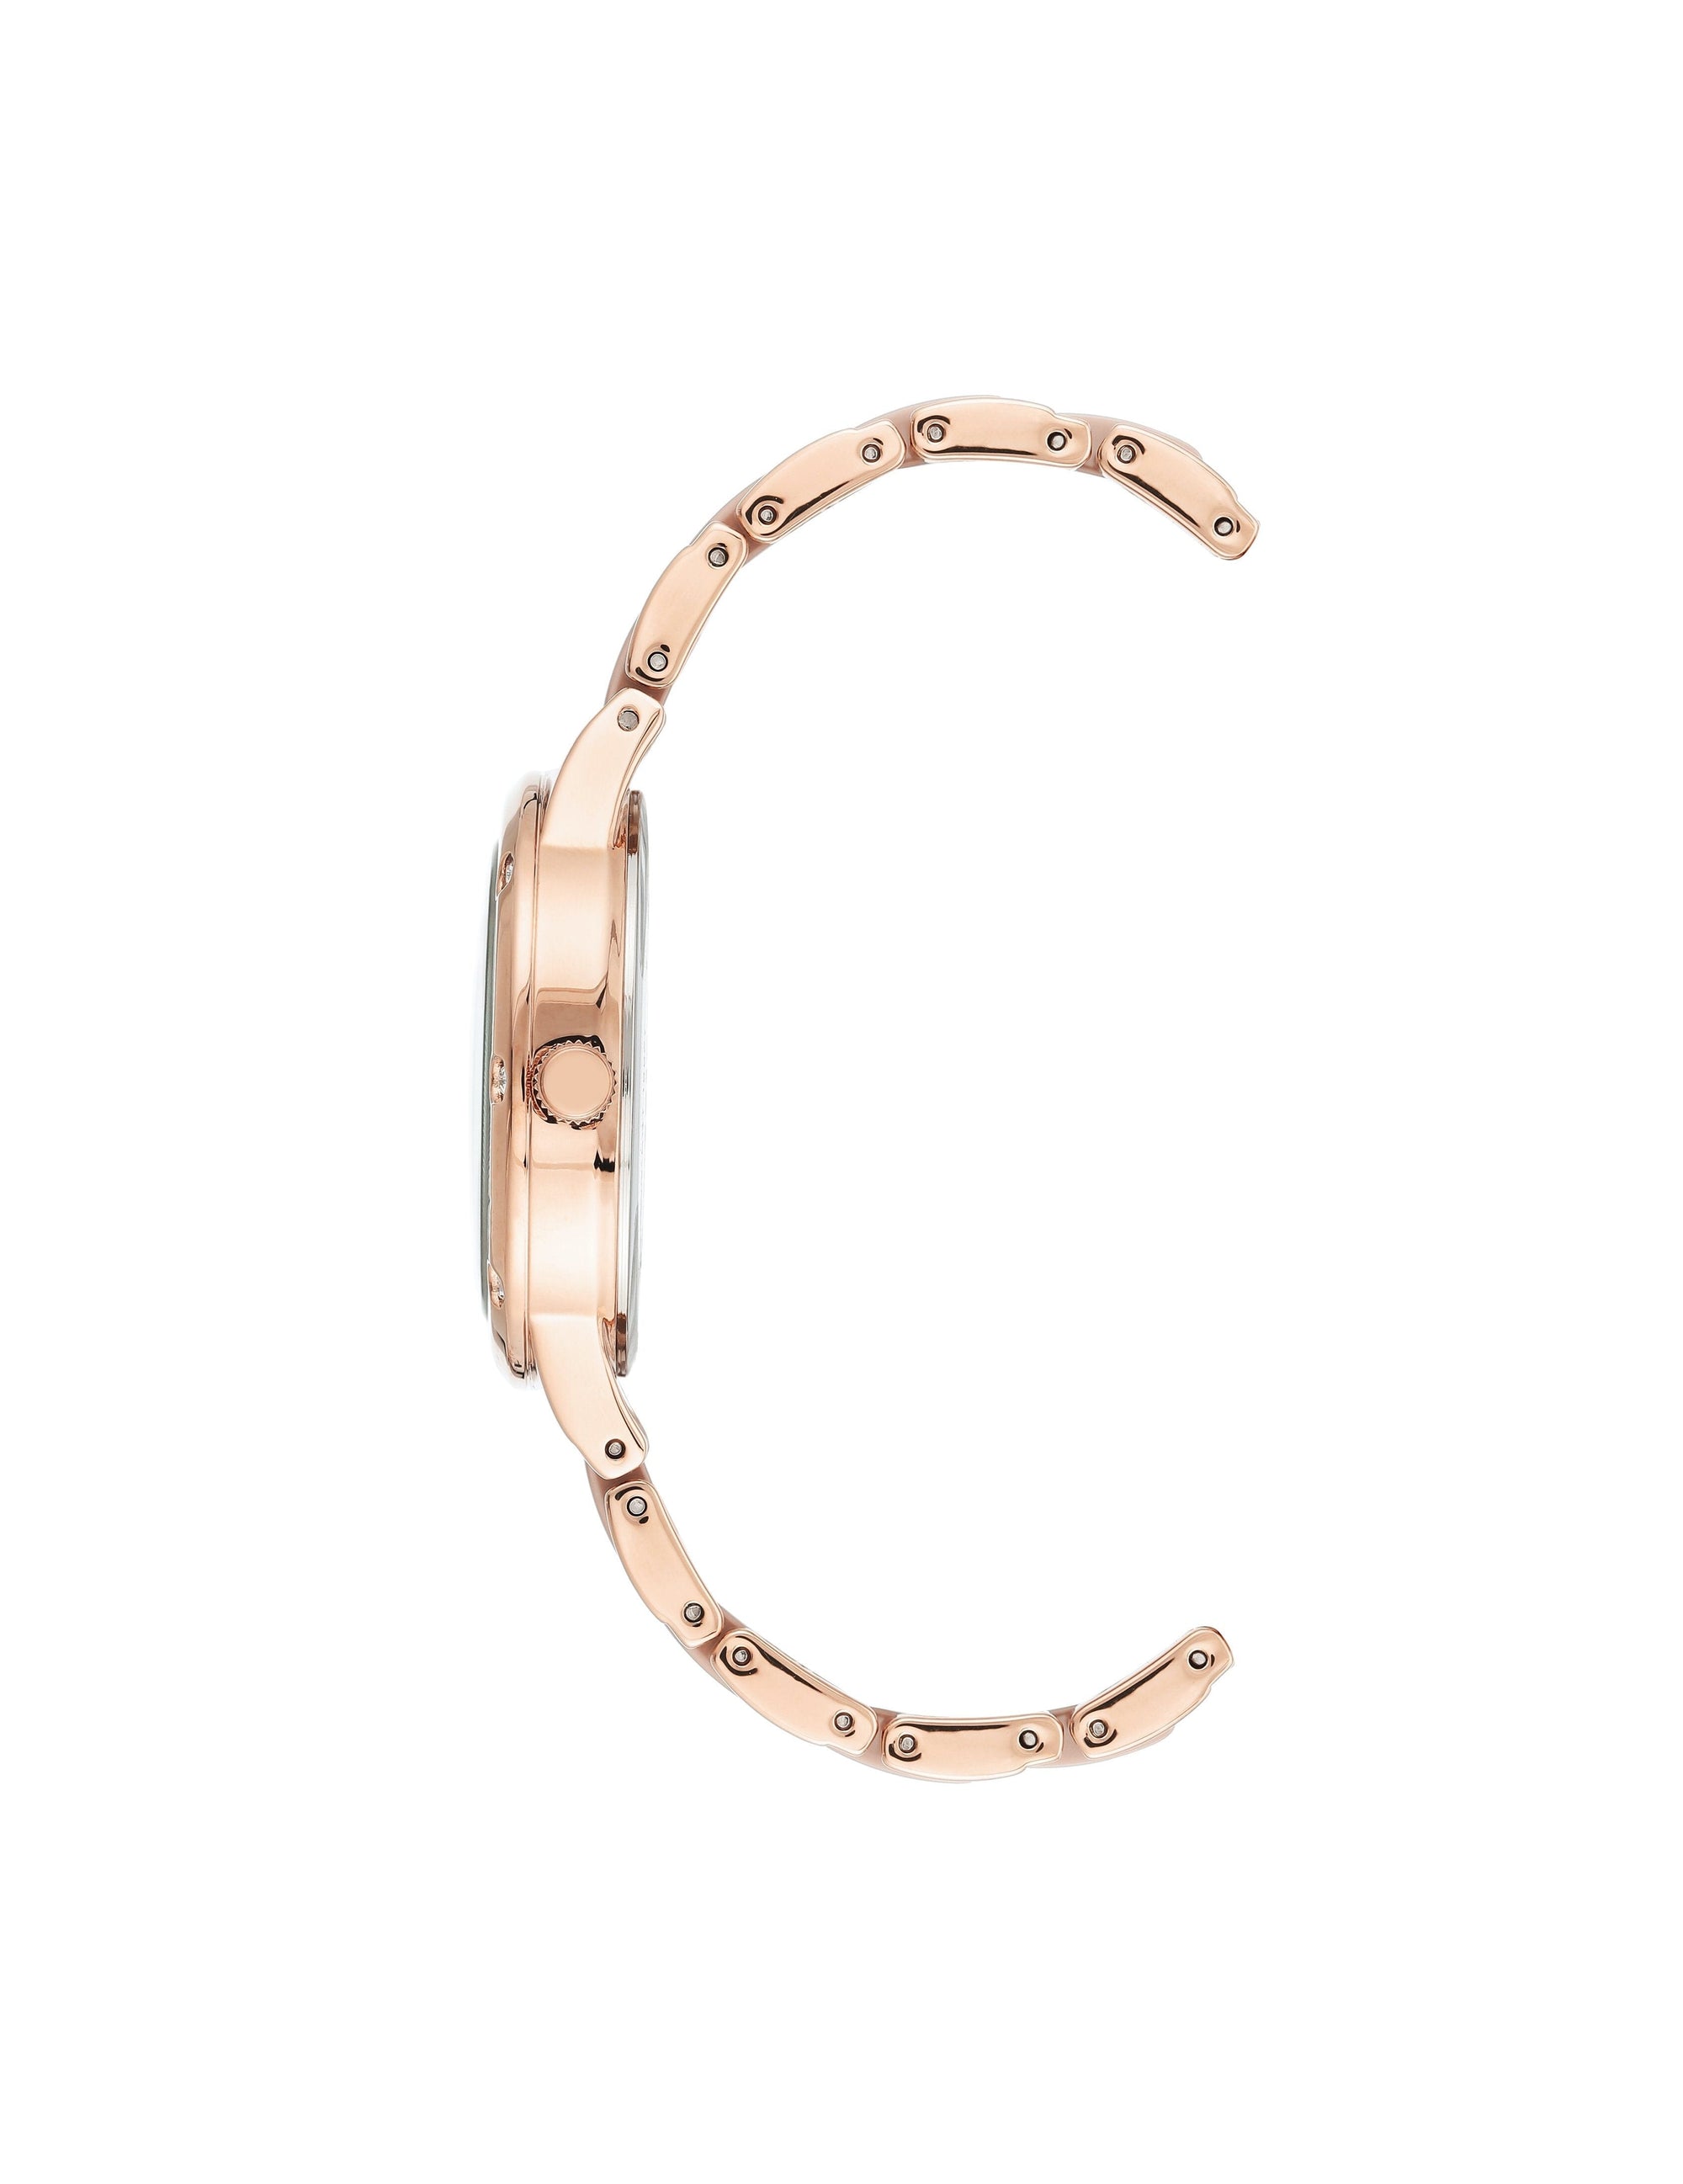 considered solar powered swarovski crystal accented rose gold-tone light pink ceramic bracelet watch